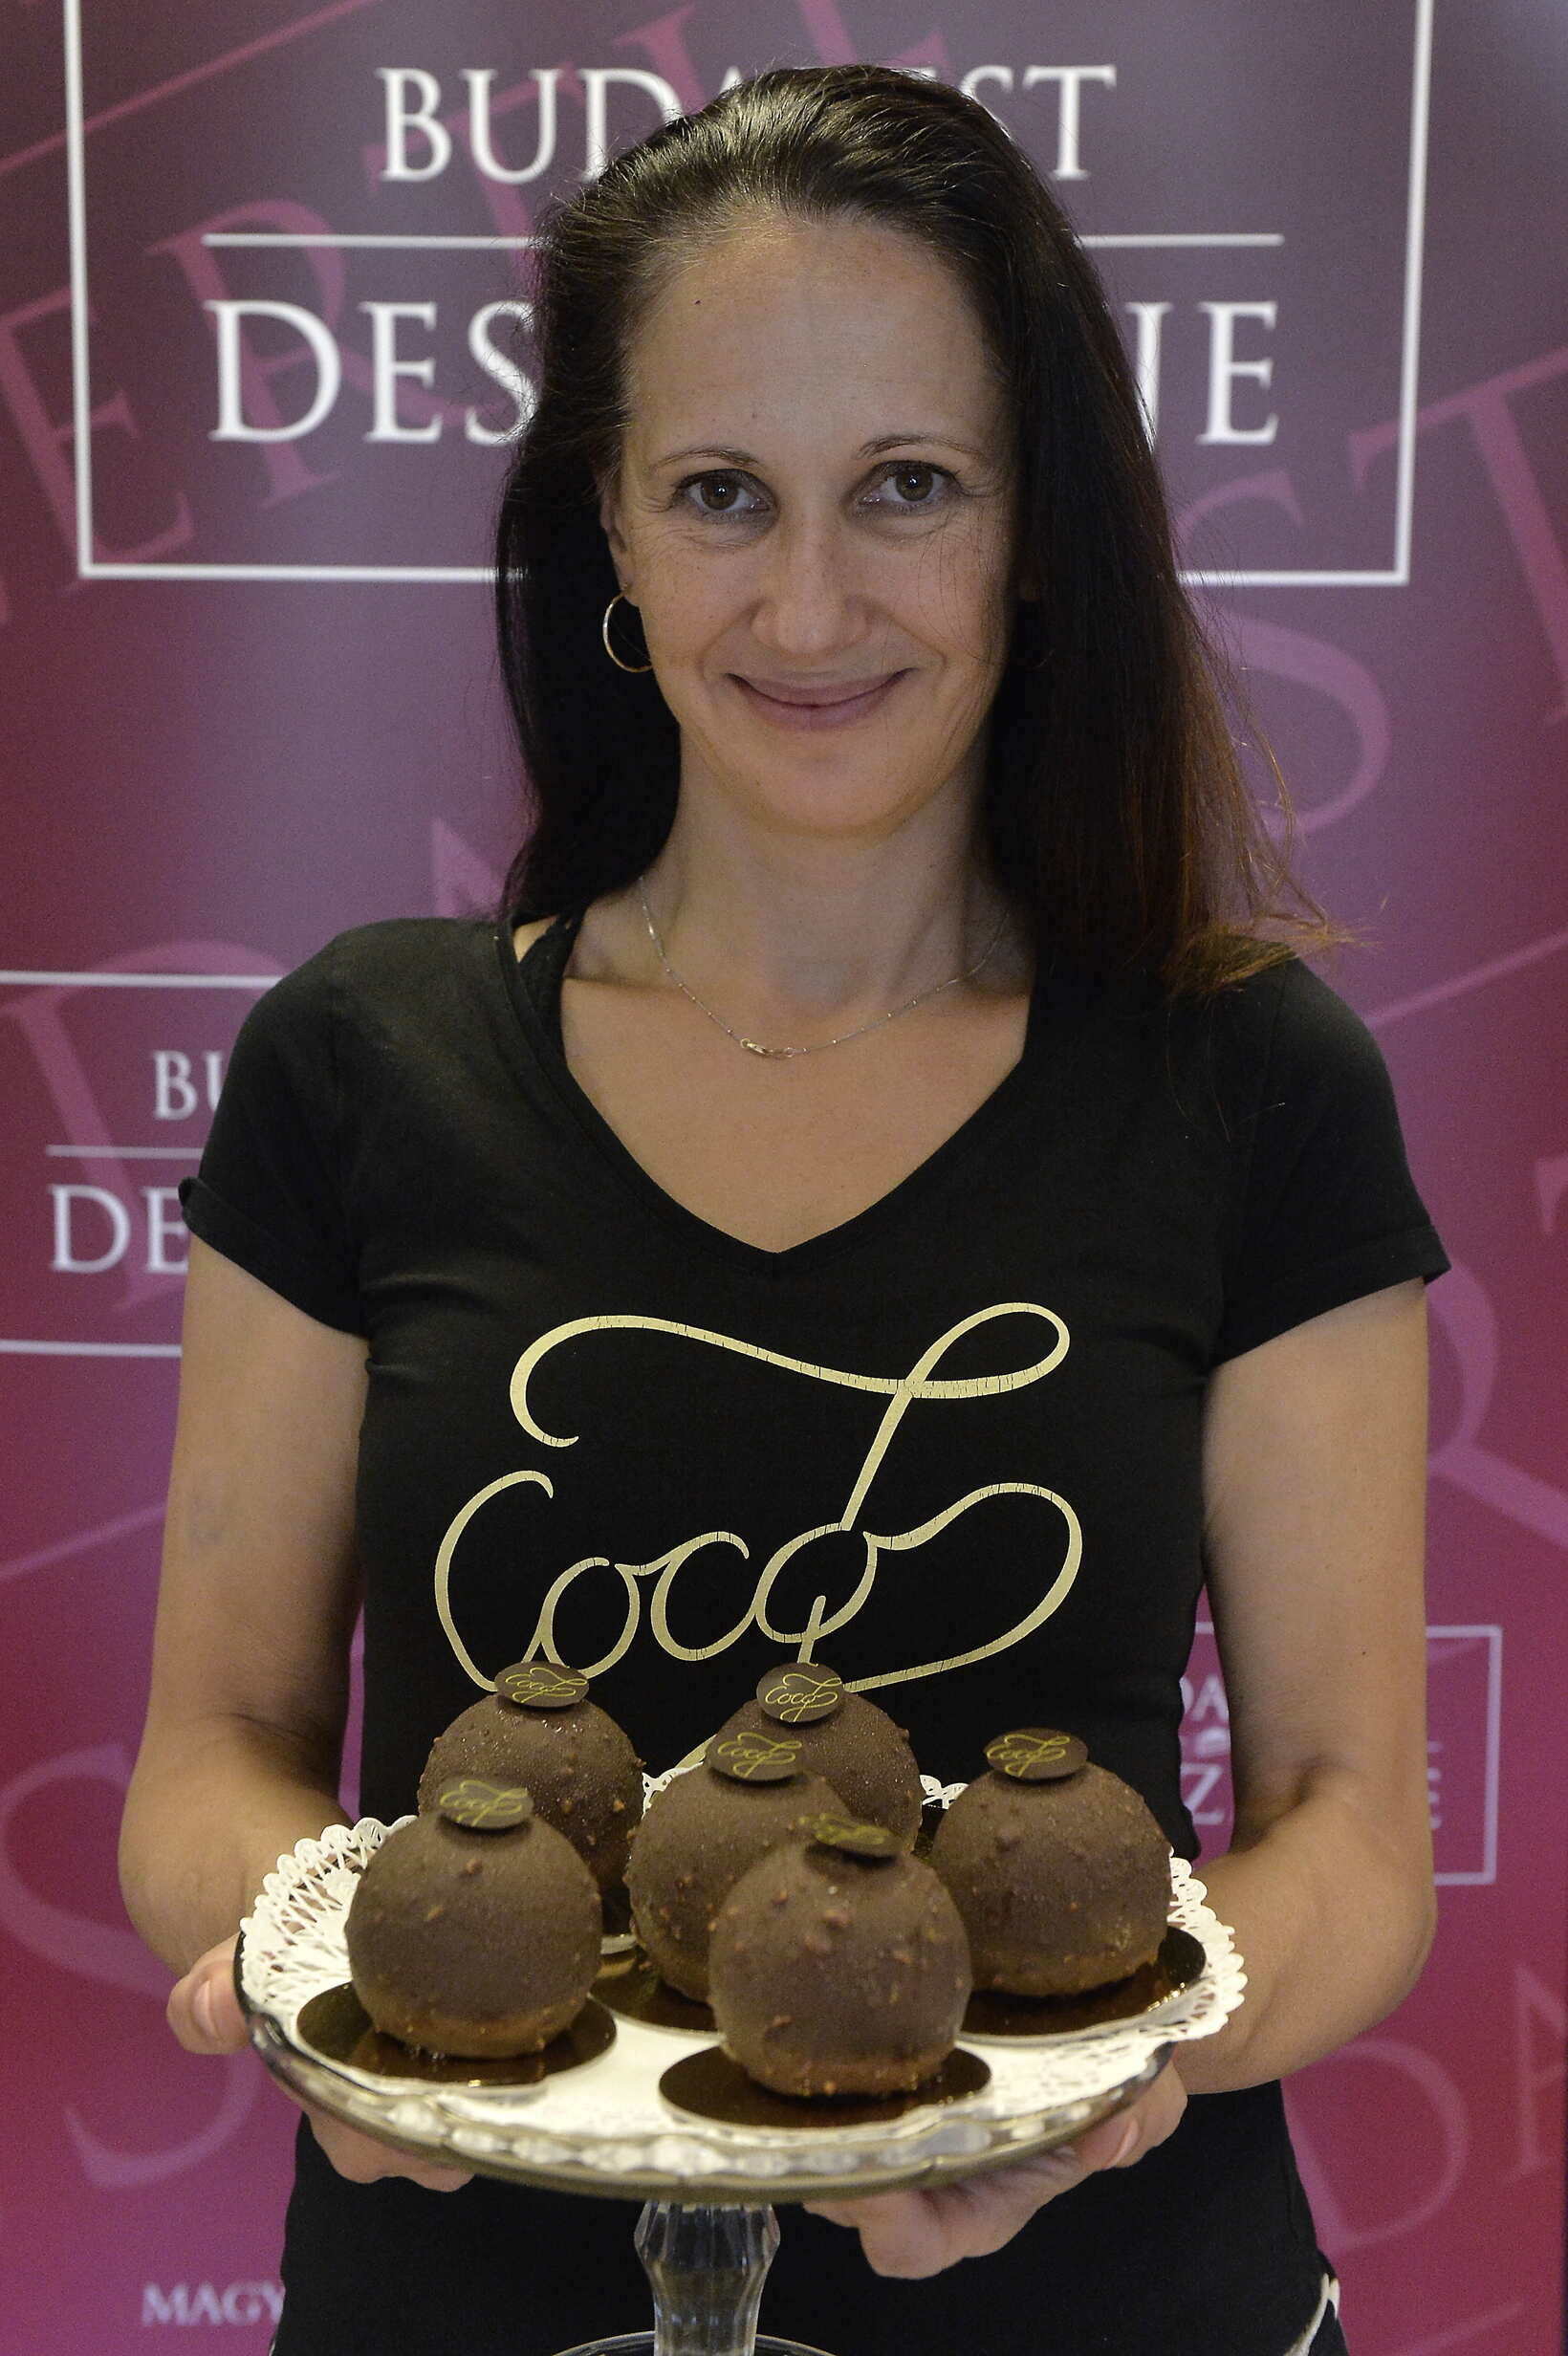 मिठाई-की-बुडापेस्ट-Coco7-चॉकलेट-दुकान-केक-भोजन